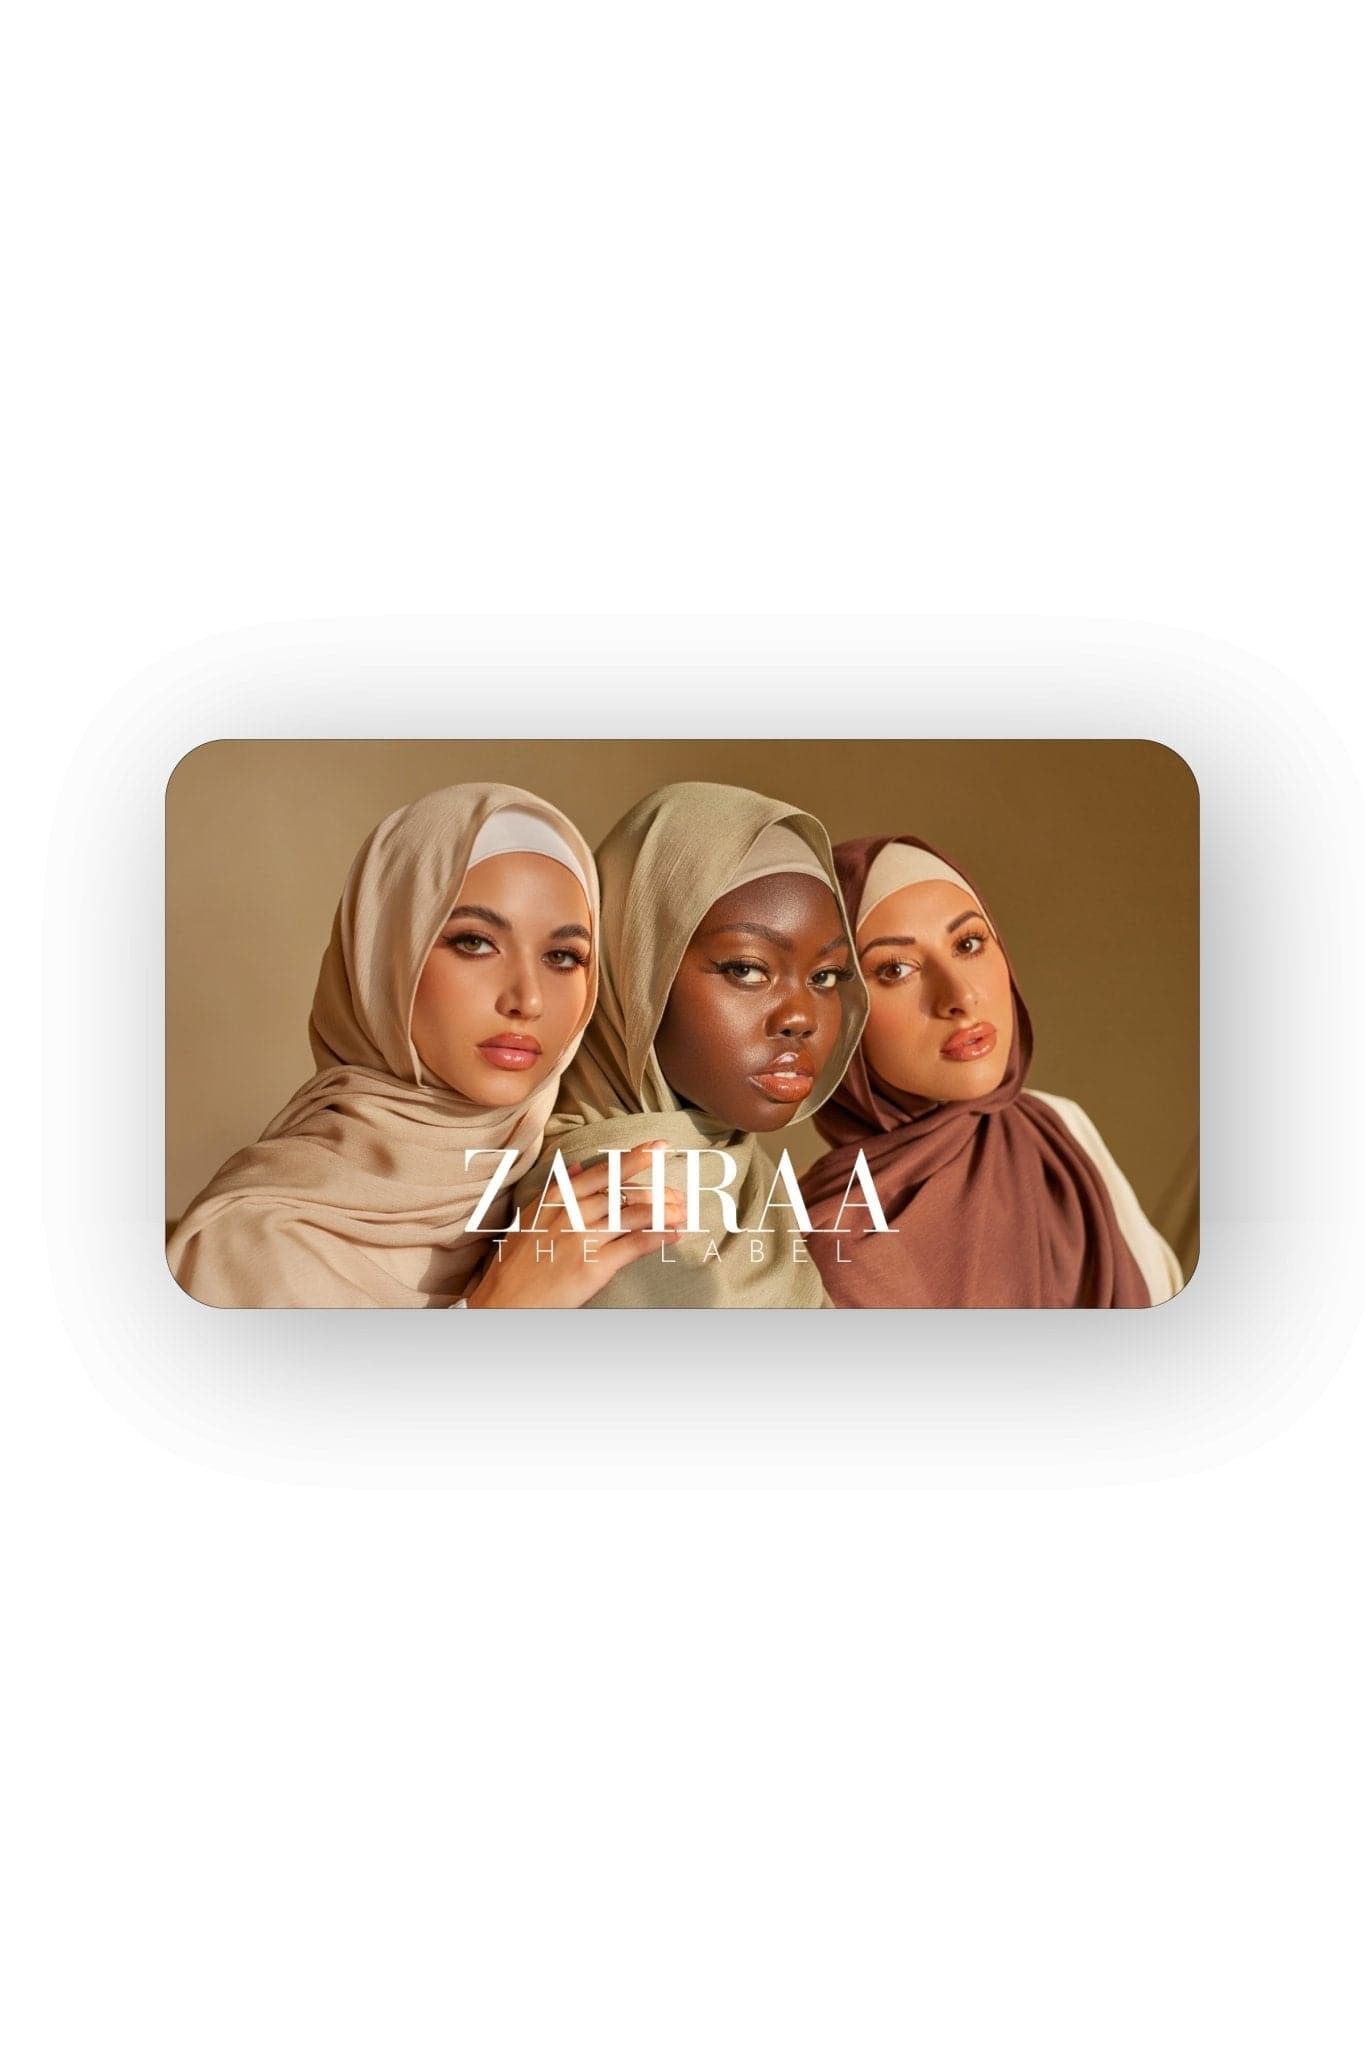 Zahraa The Label Gift Card - Zahraa The Label